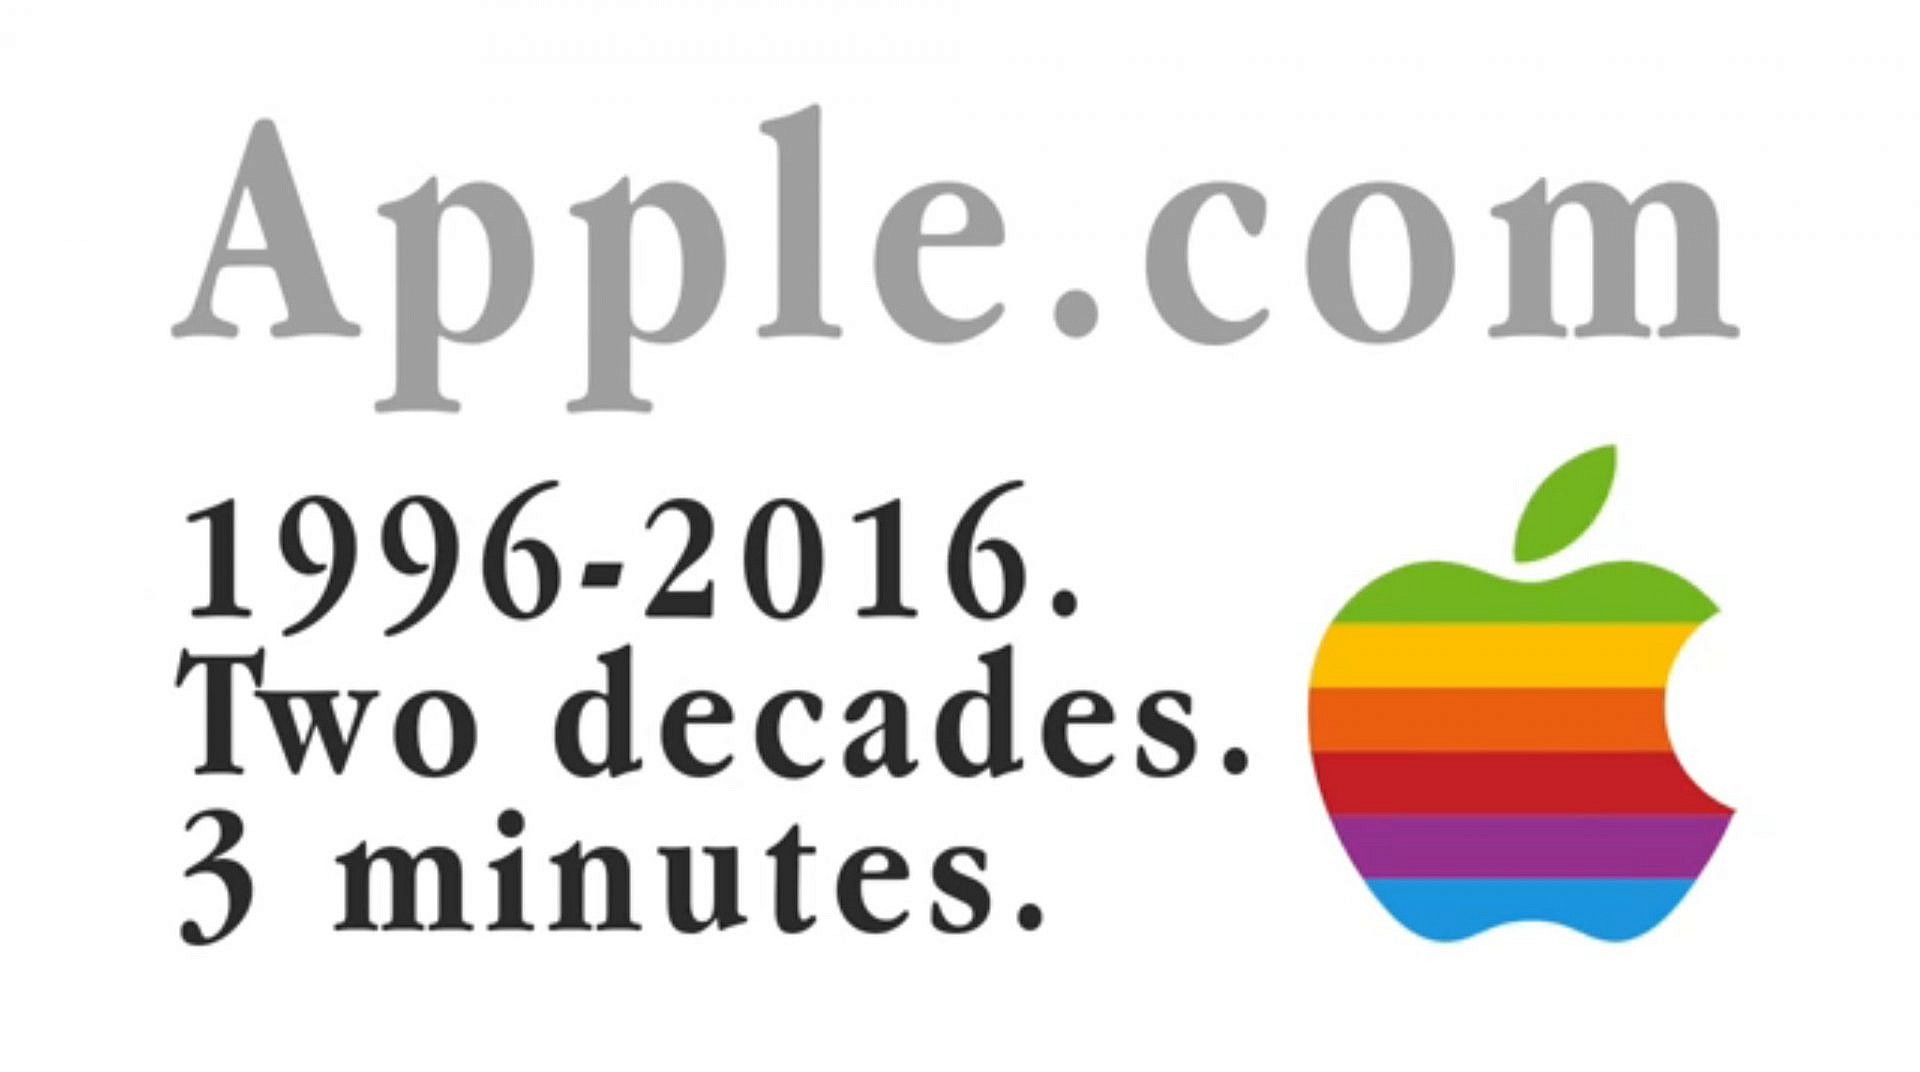 20 years of www.apple.com